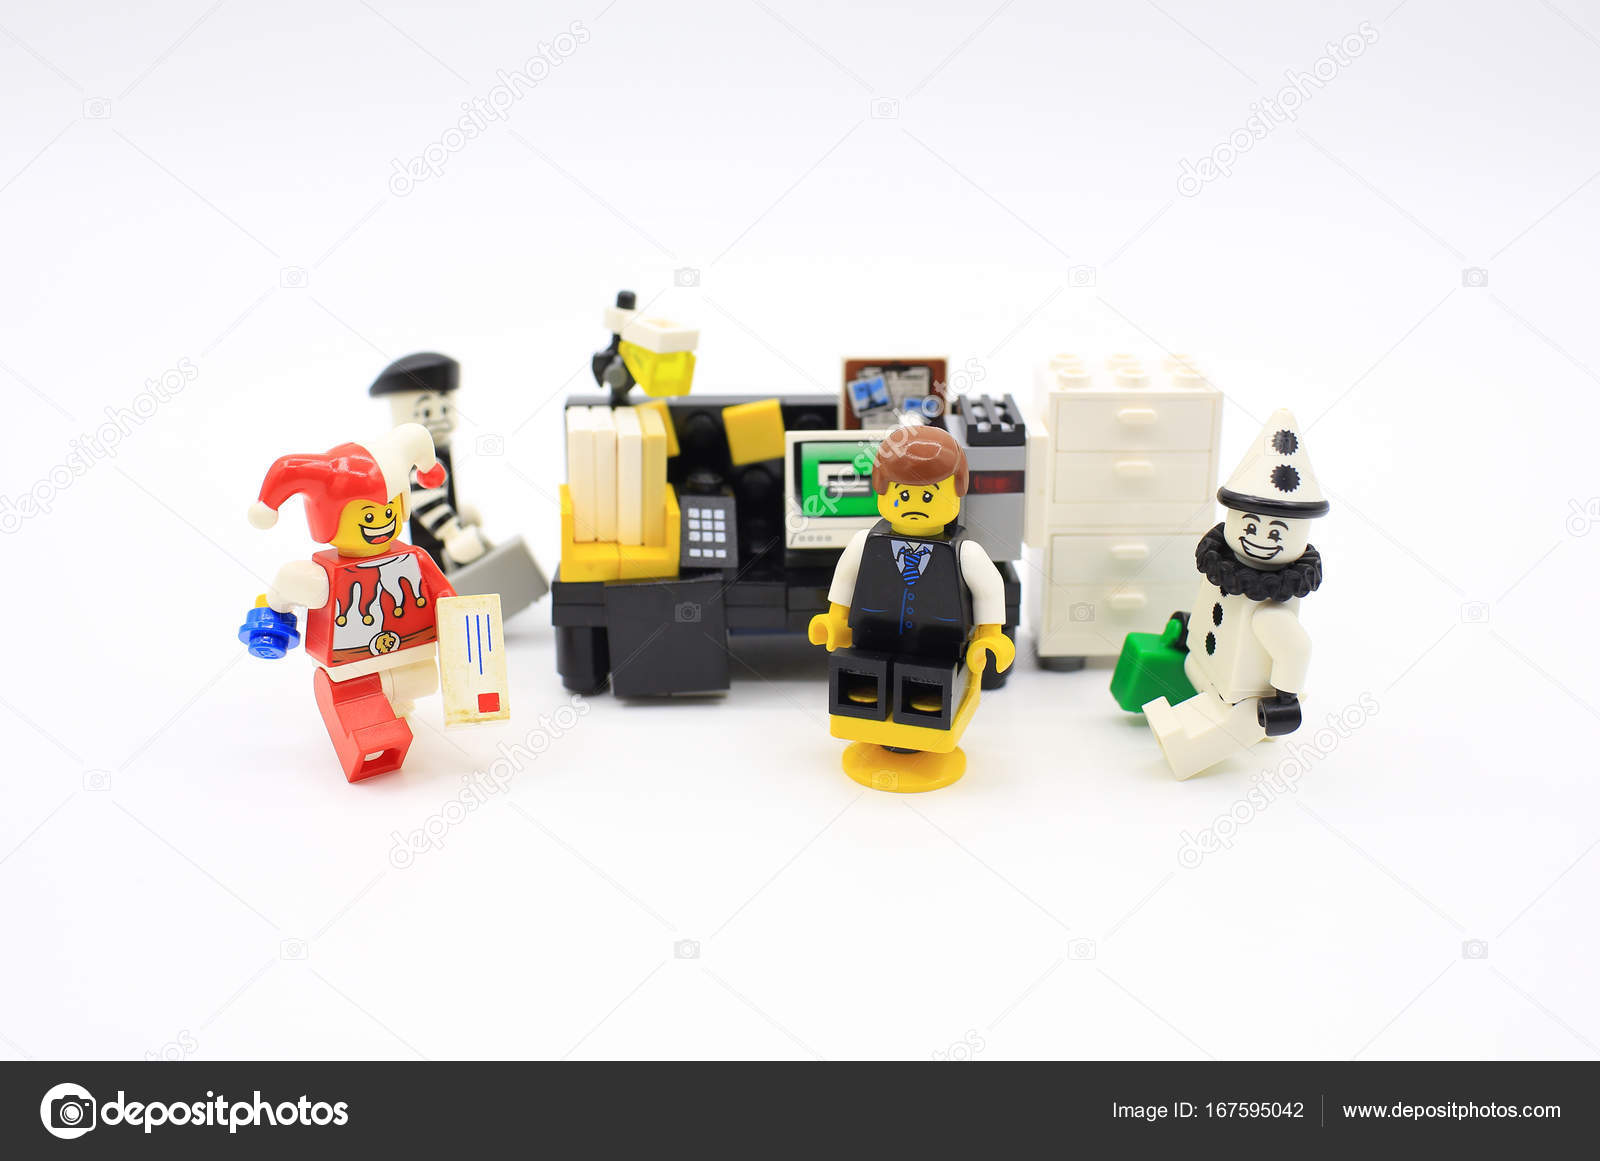 Prisnedsættelse Donation koncert Lego office mand and clown – Stock Editorial Photo © lewistse #167595042